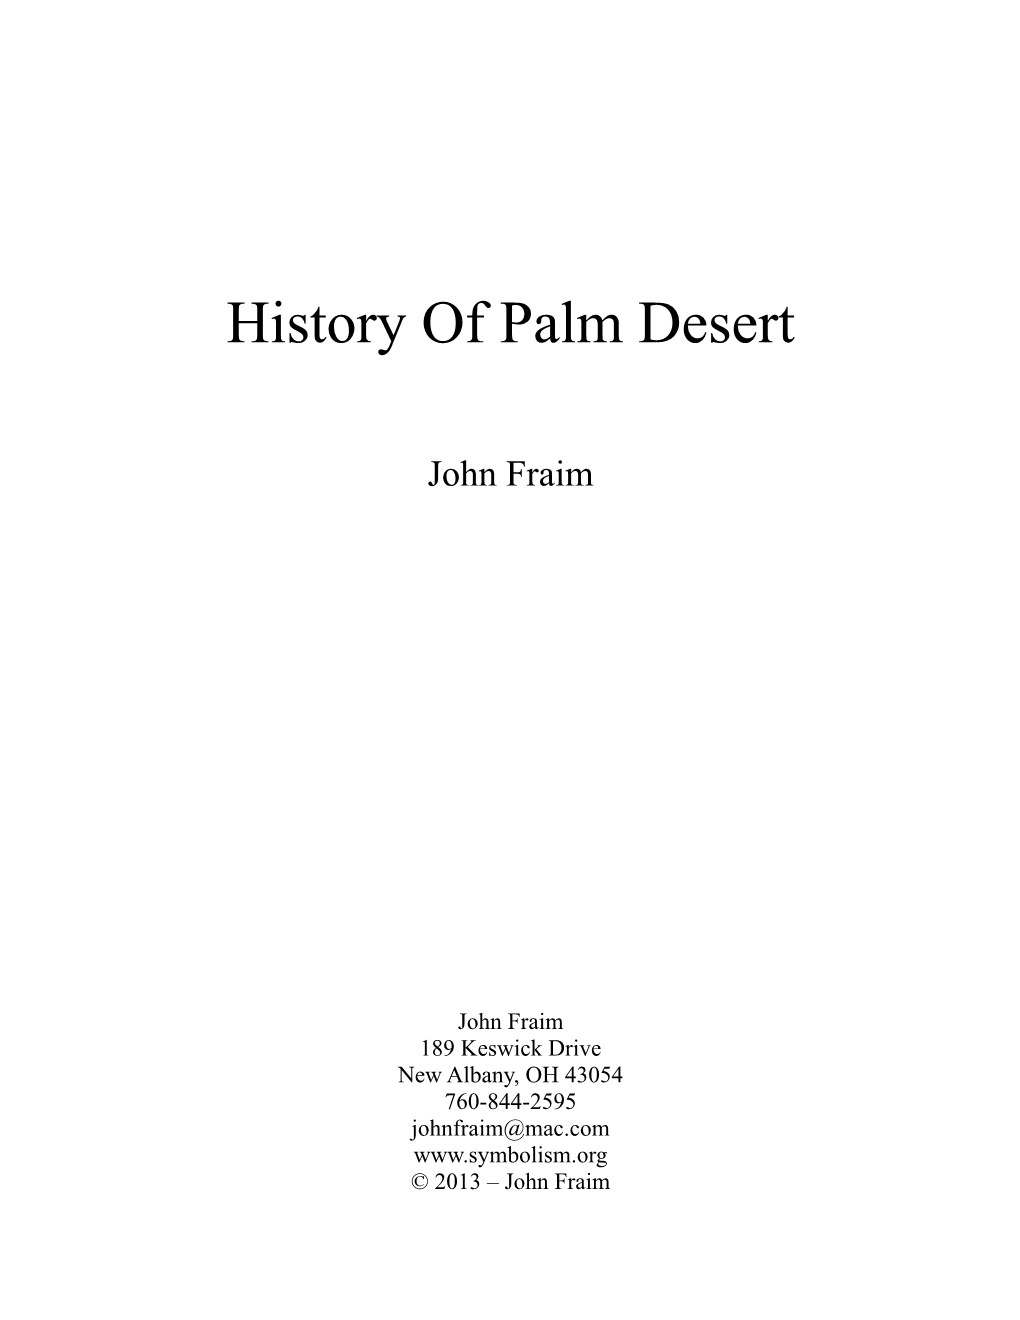 Palm Desert History